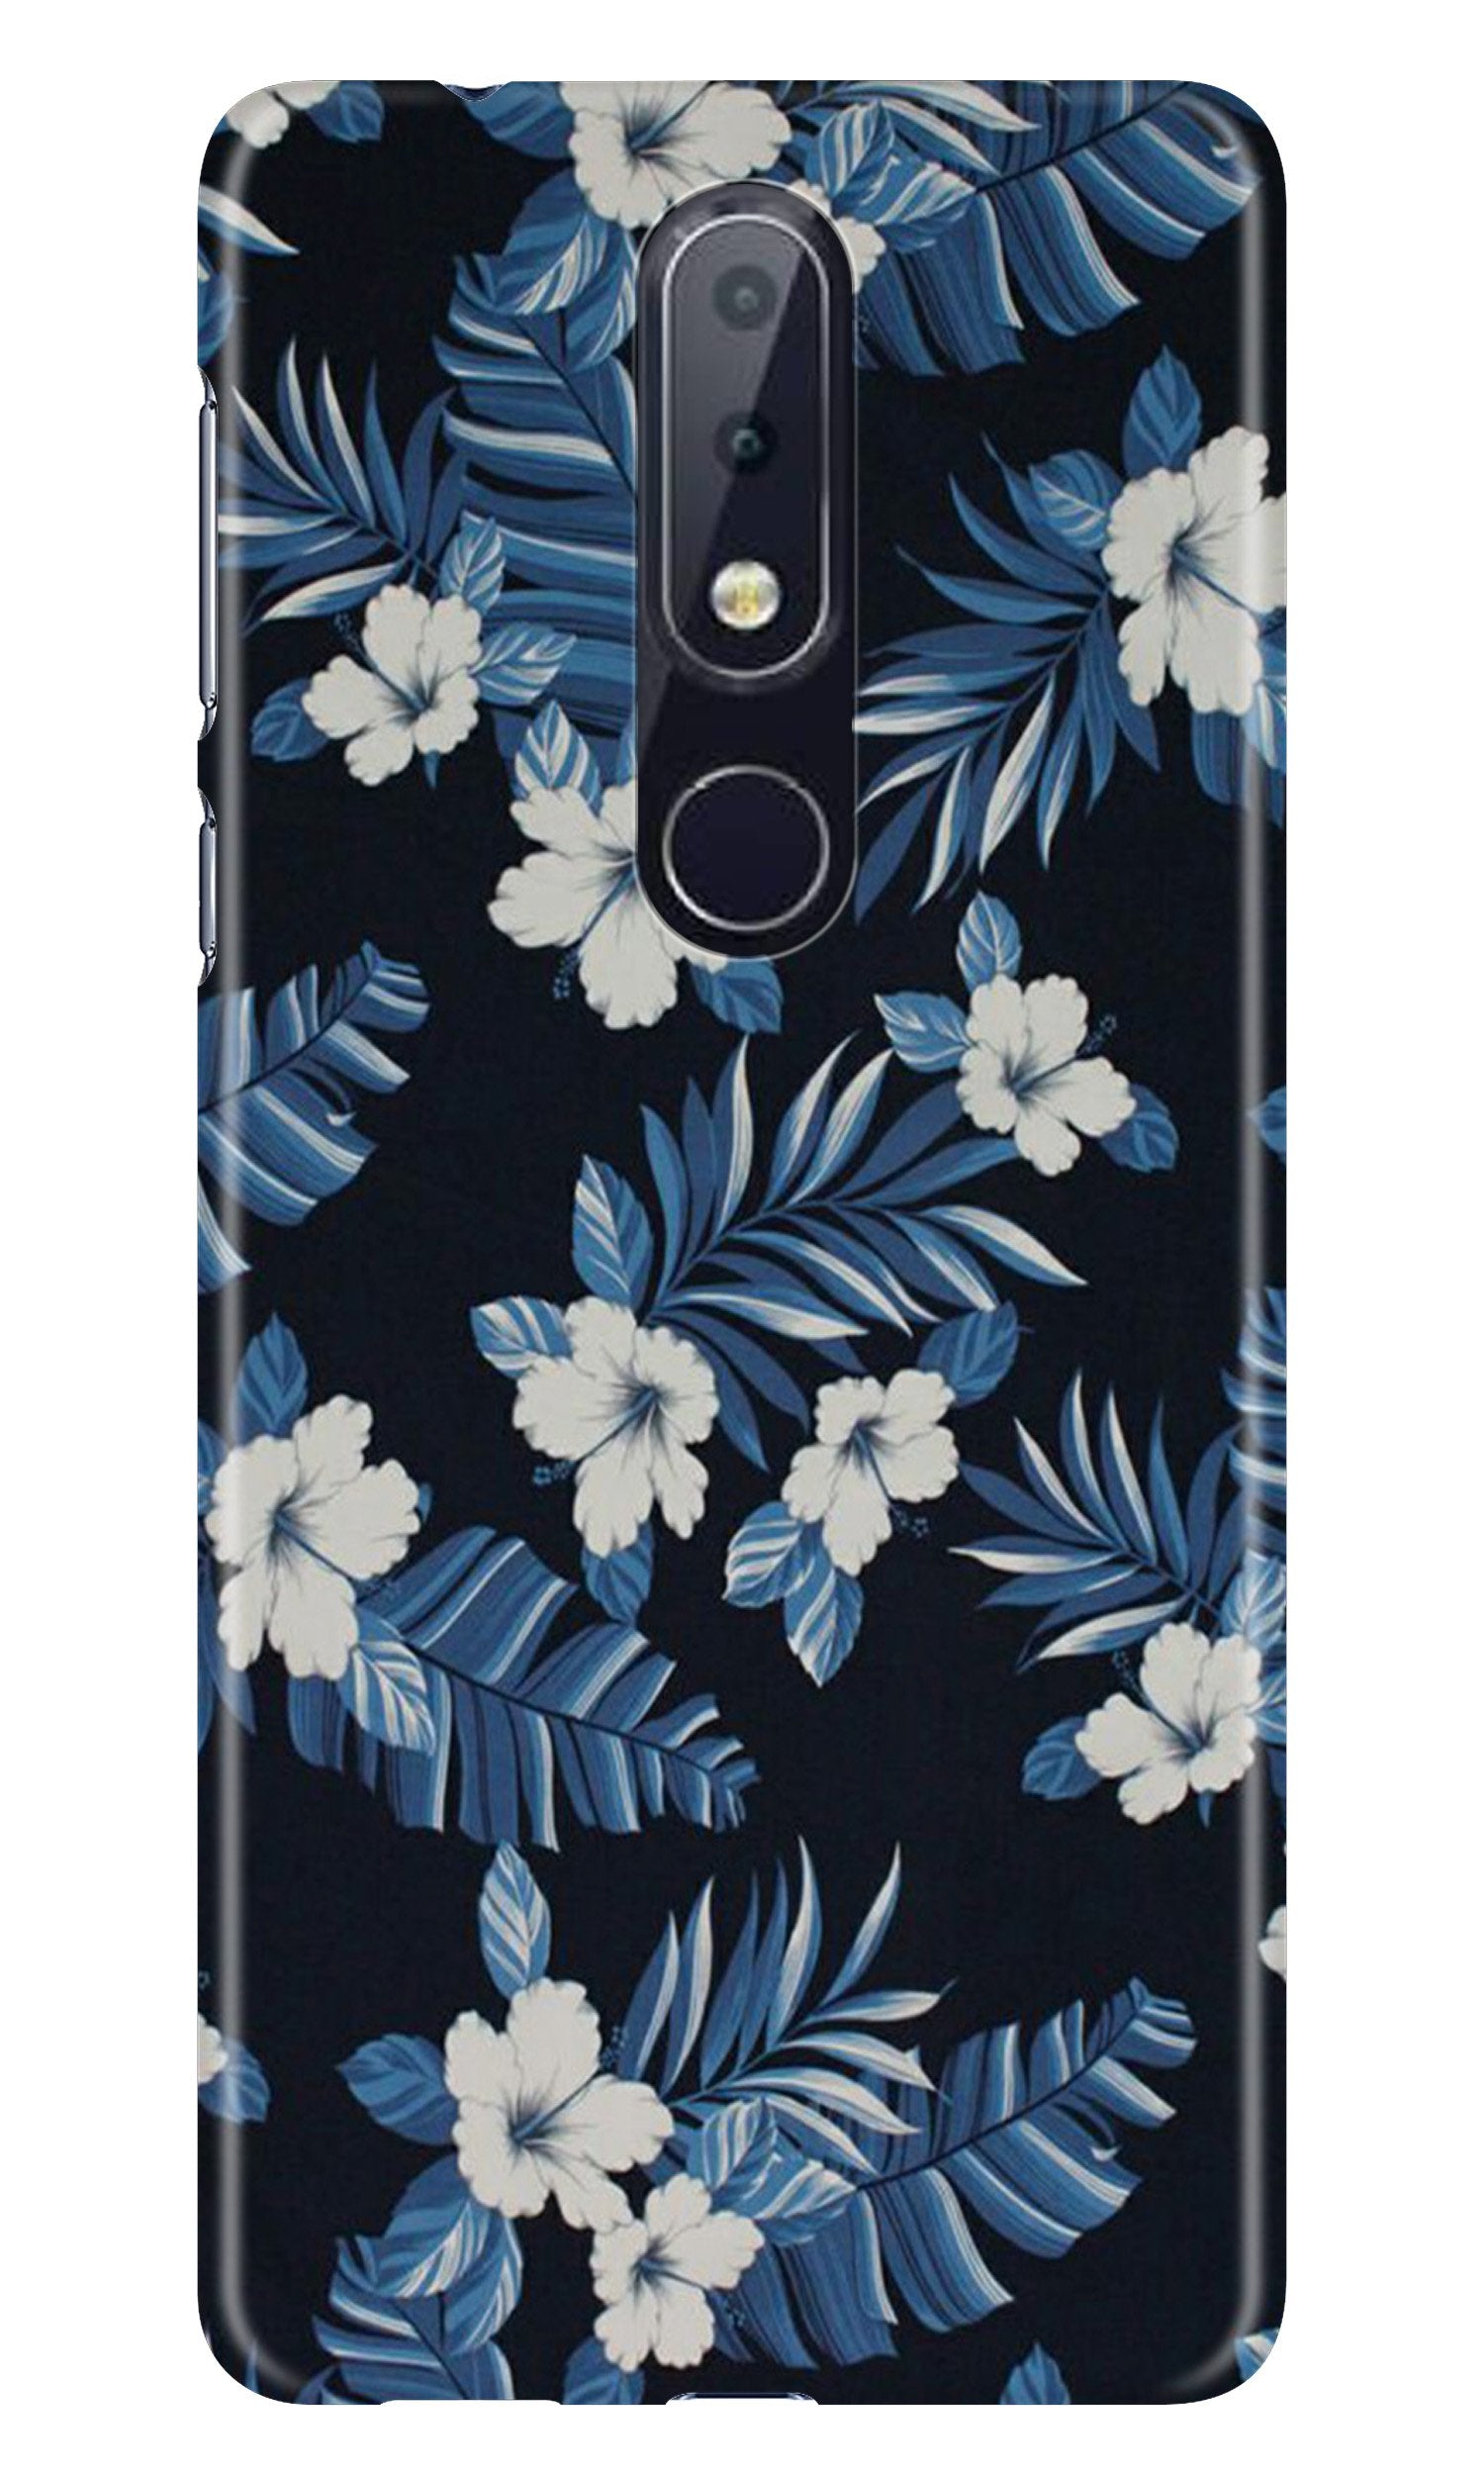 White flowers Blue Background2 Case for Nokia 6.1 Plus